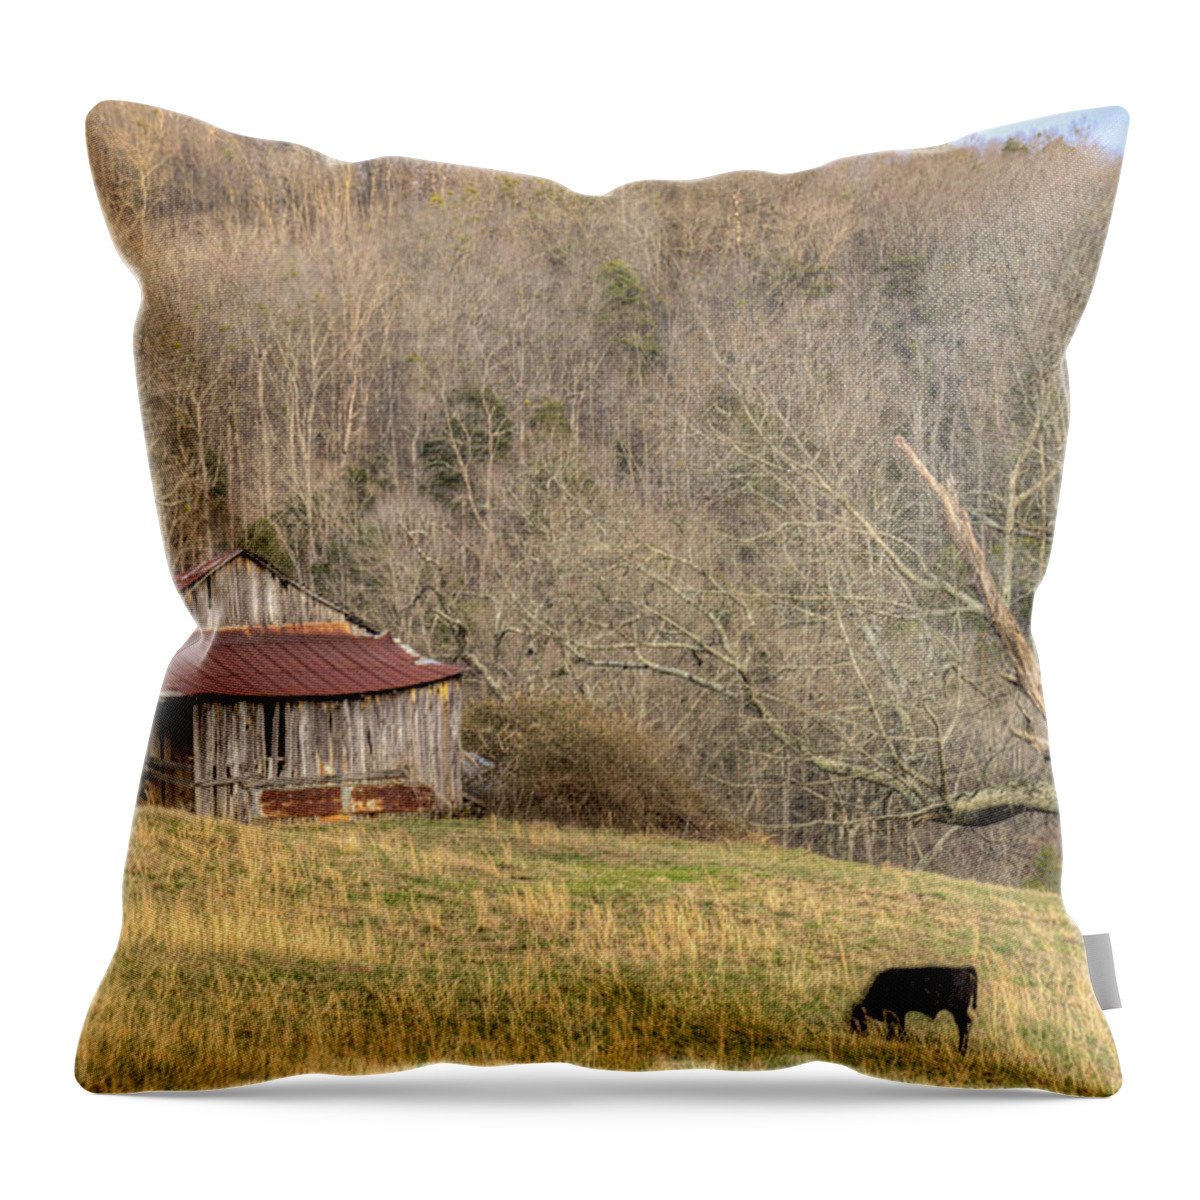 Barn Throw Pillow featuring the photograph Smoky Mountain Barn 10 by Douglas Barnett